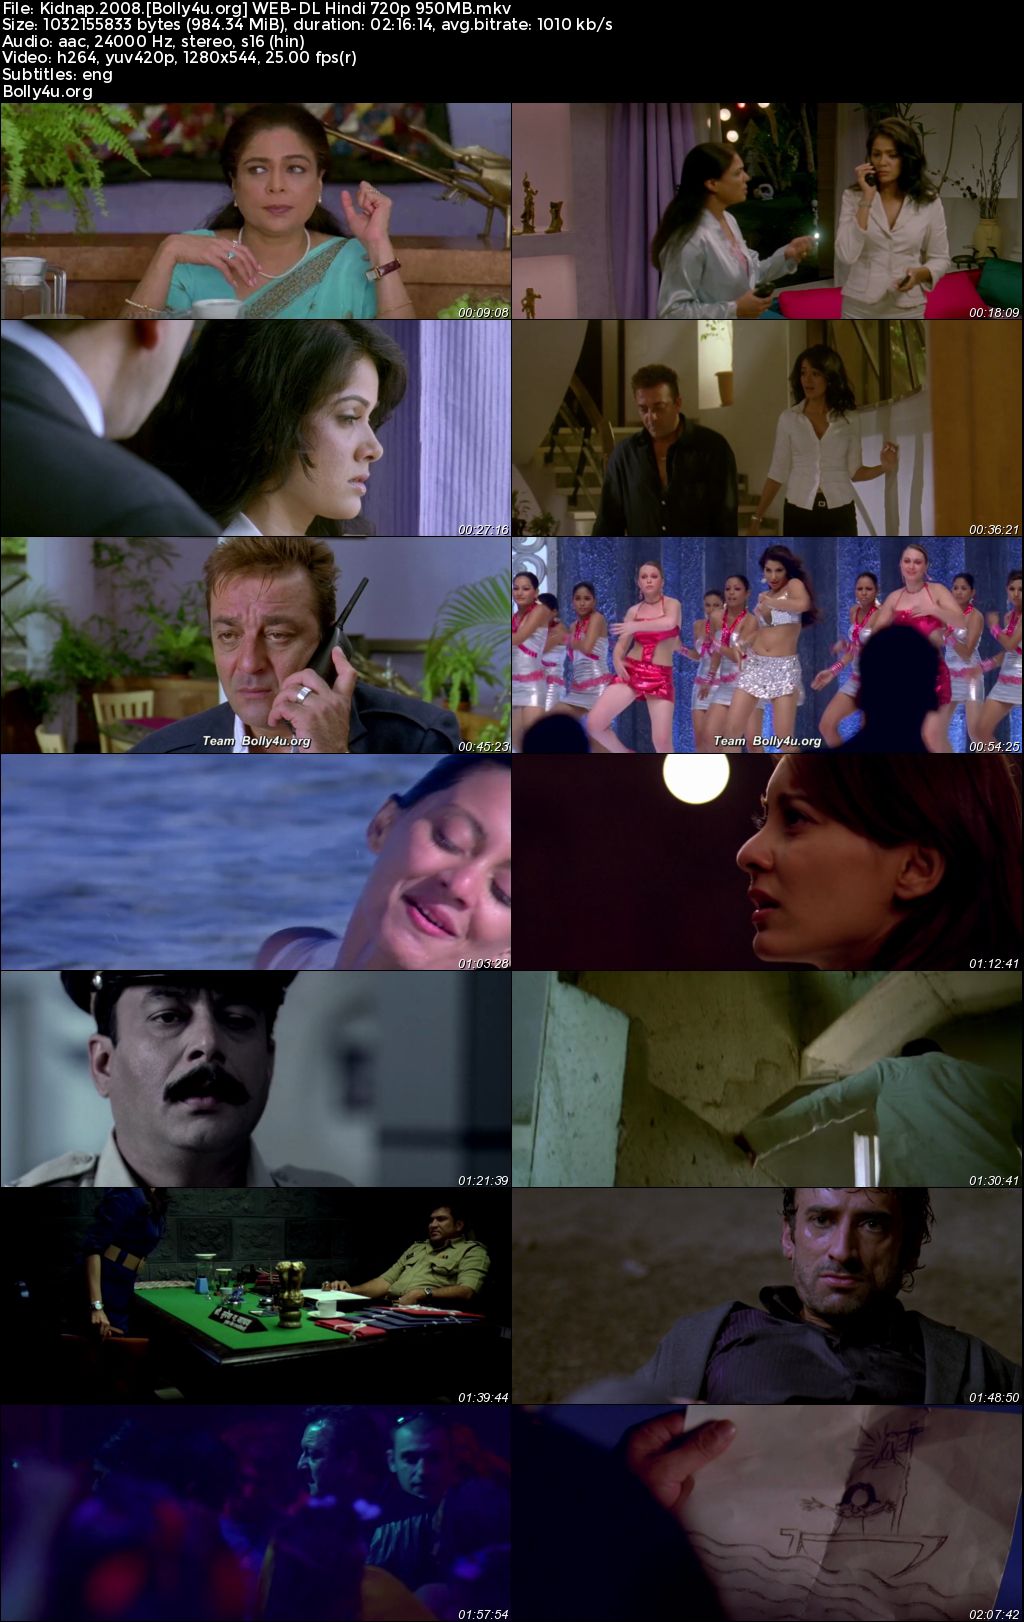 Kidnap 2008 WEB-DL Hindi Full Movie Download 720p 480p